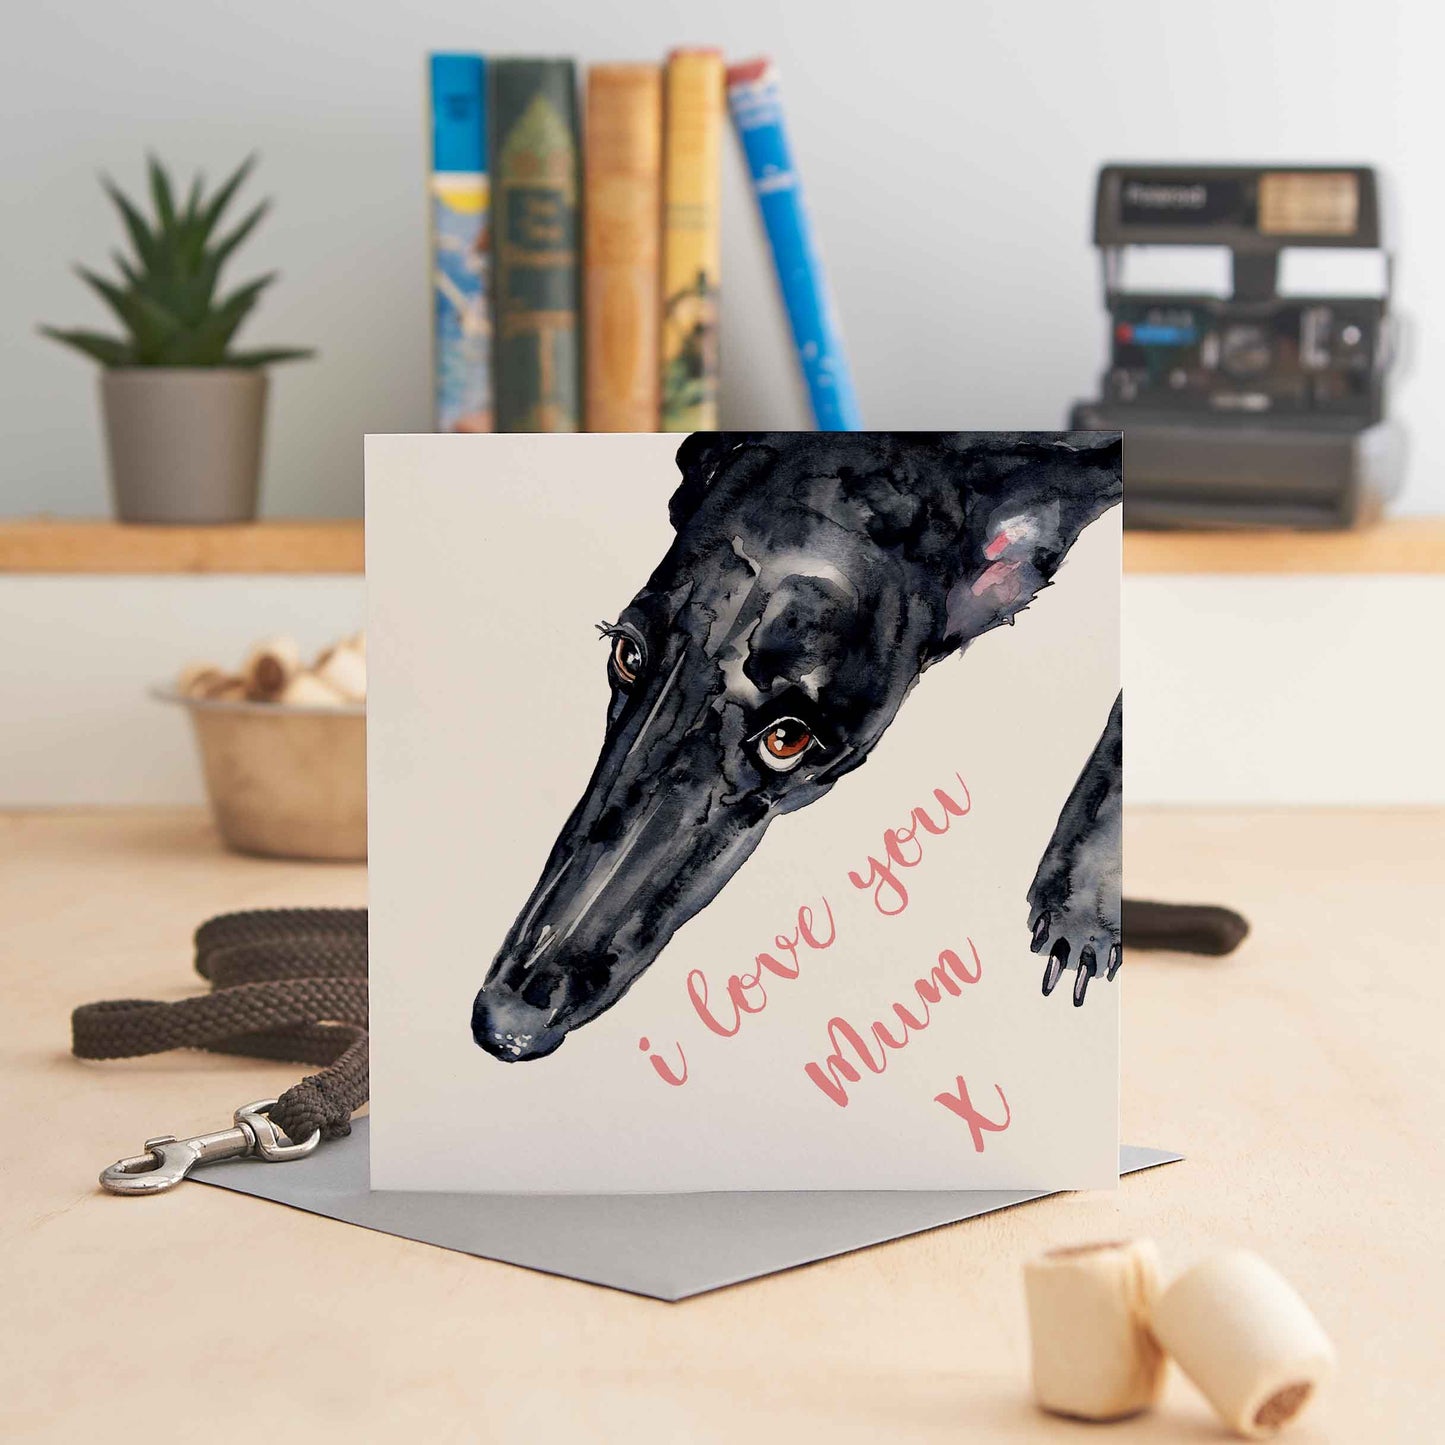 I Love You Mum - Black Greyhound - Greeting Card